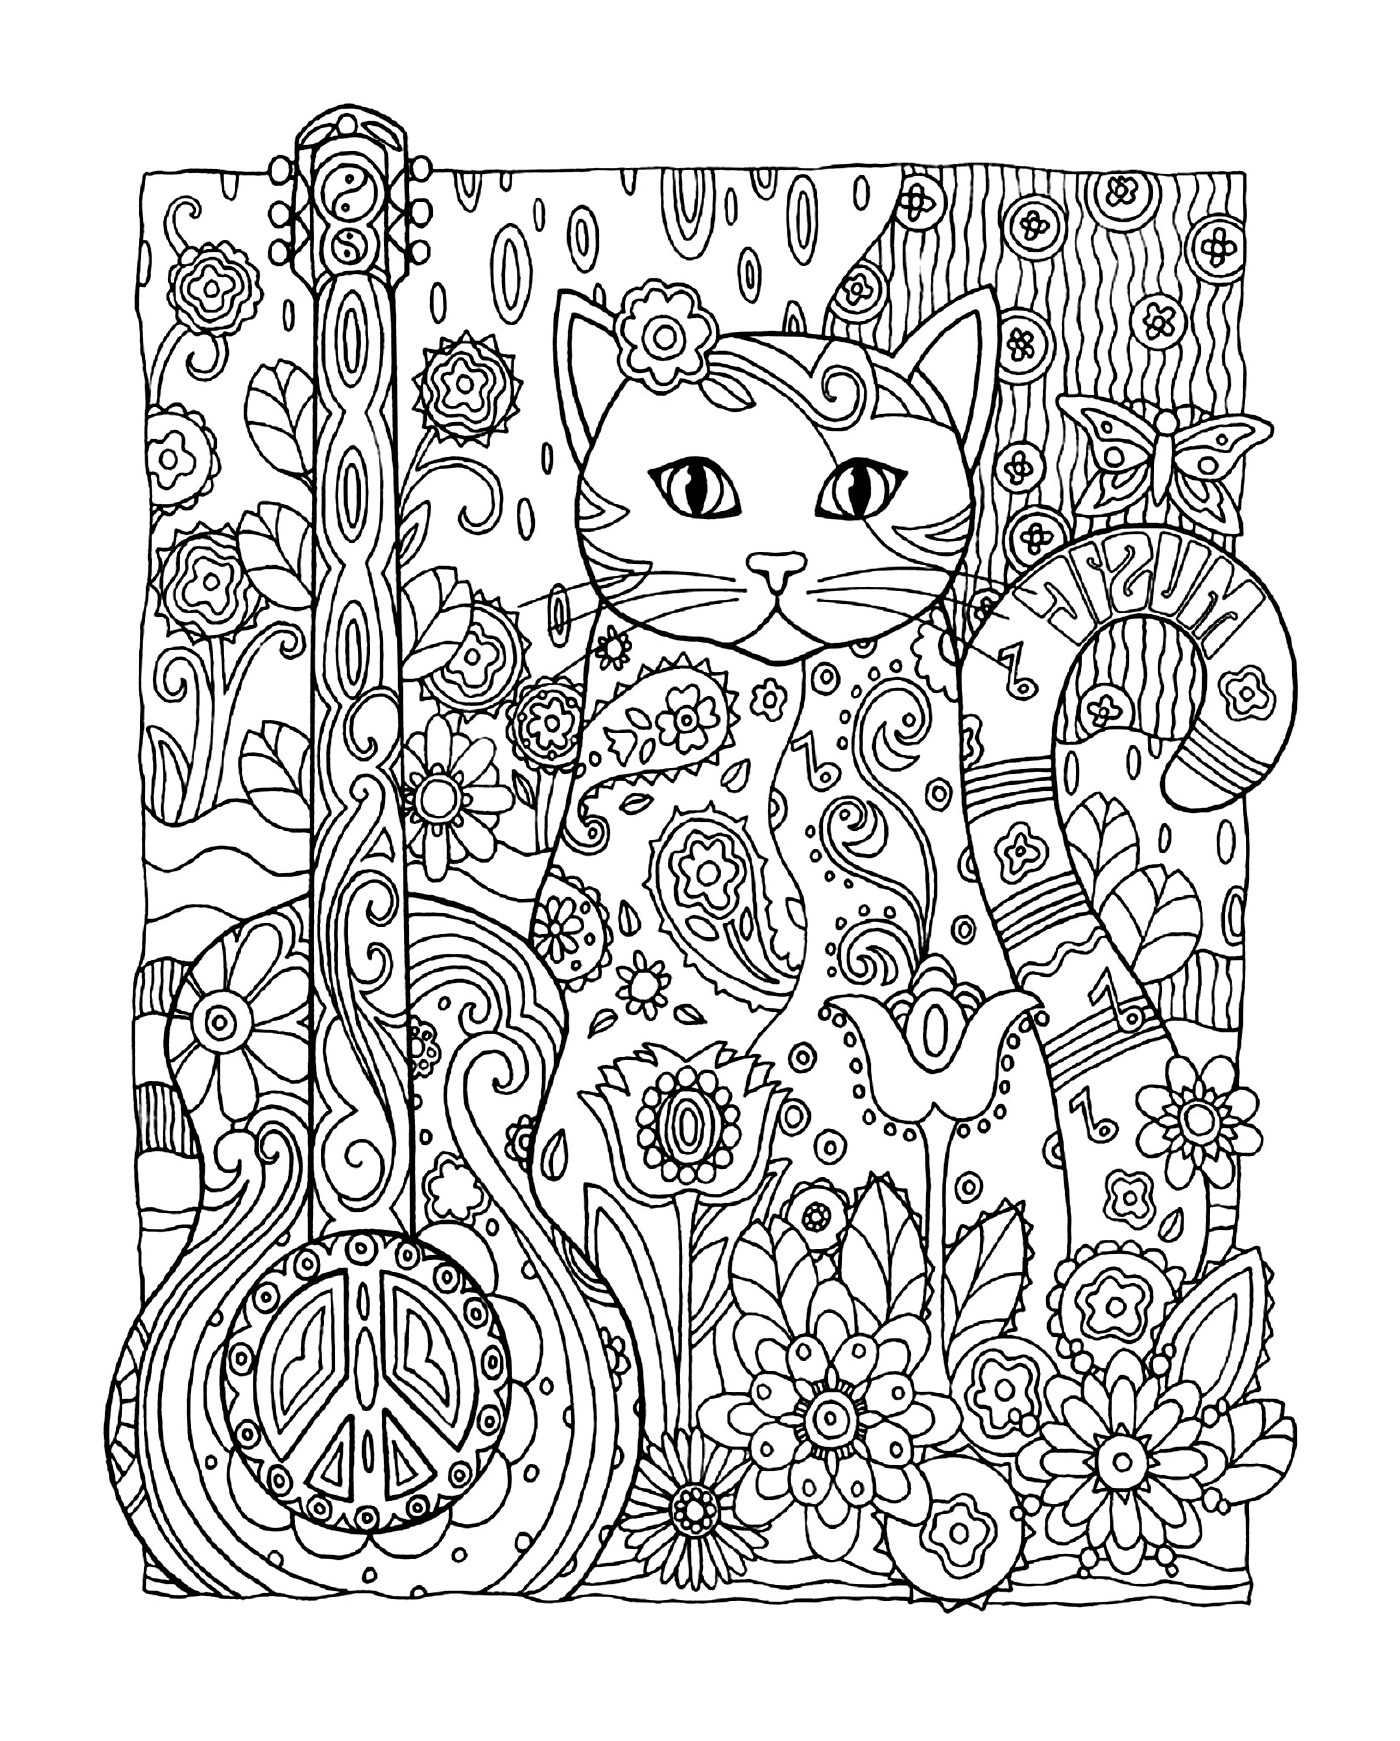  Un gato adulto sentado en un bosque 